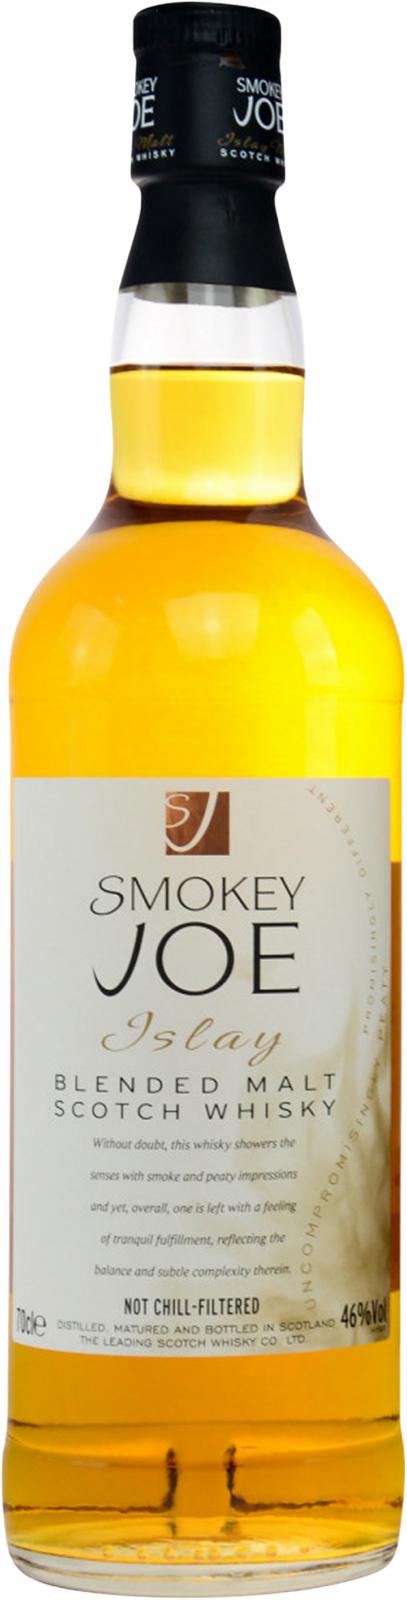 Smokey Joe Islay Blended Malt Scotch Whisky 46% 750ml